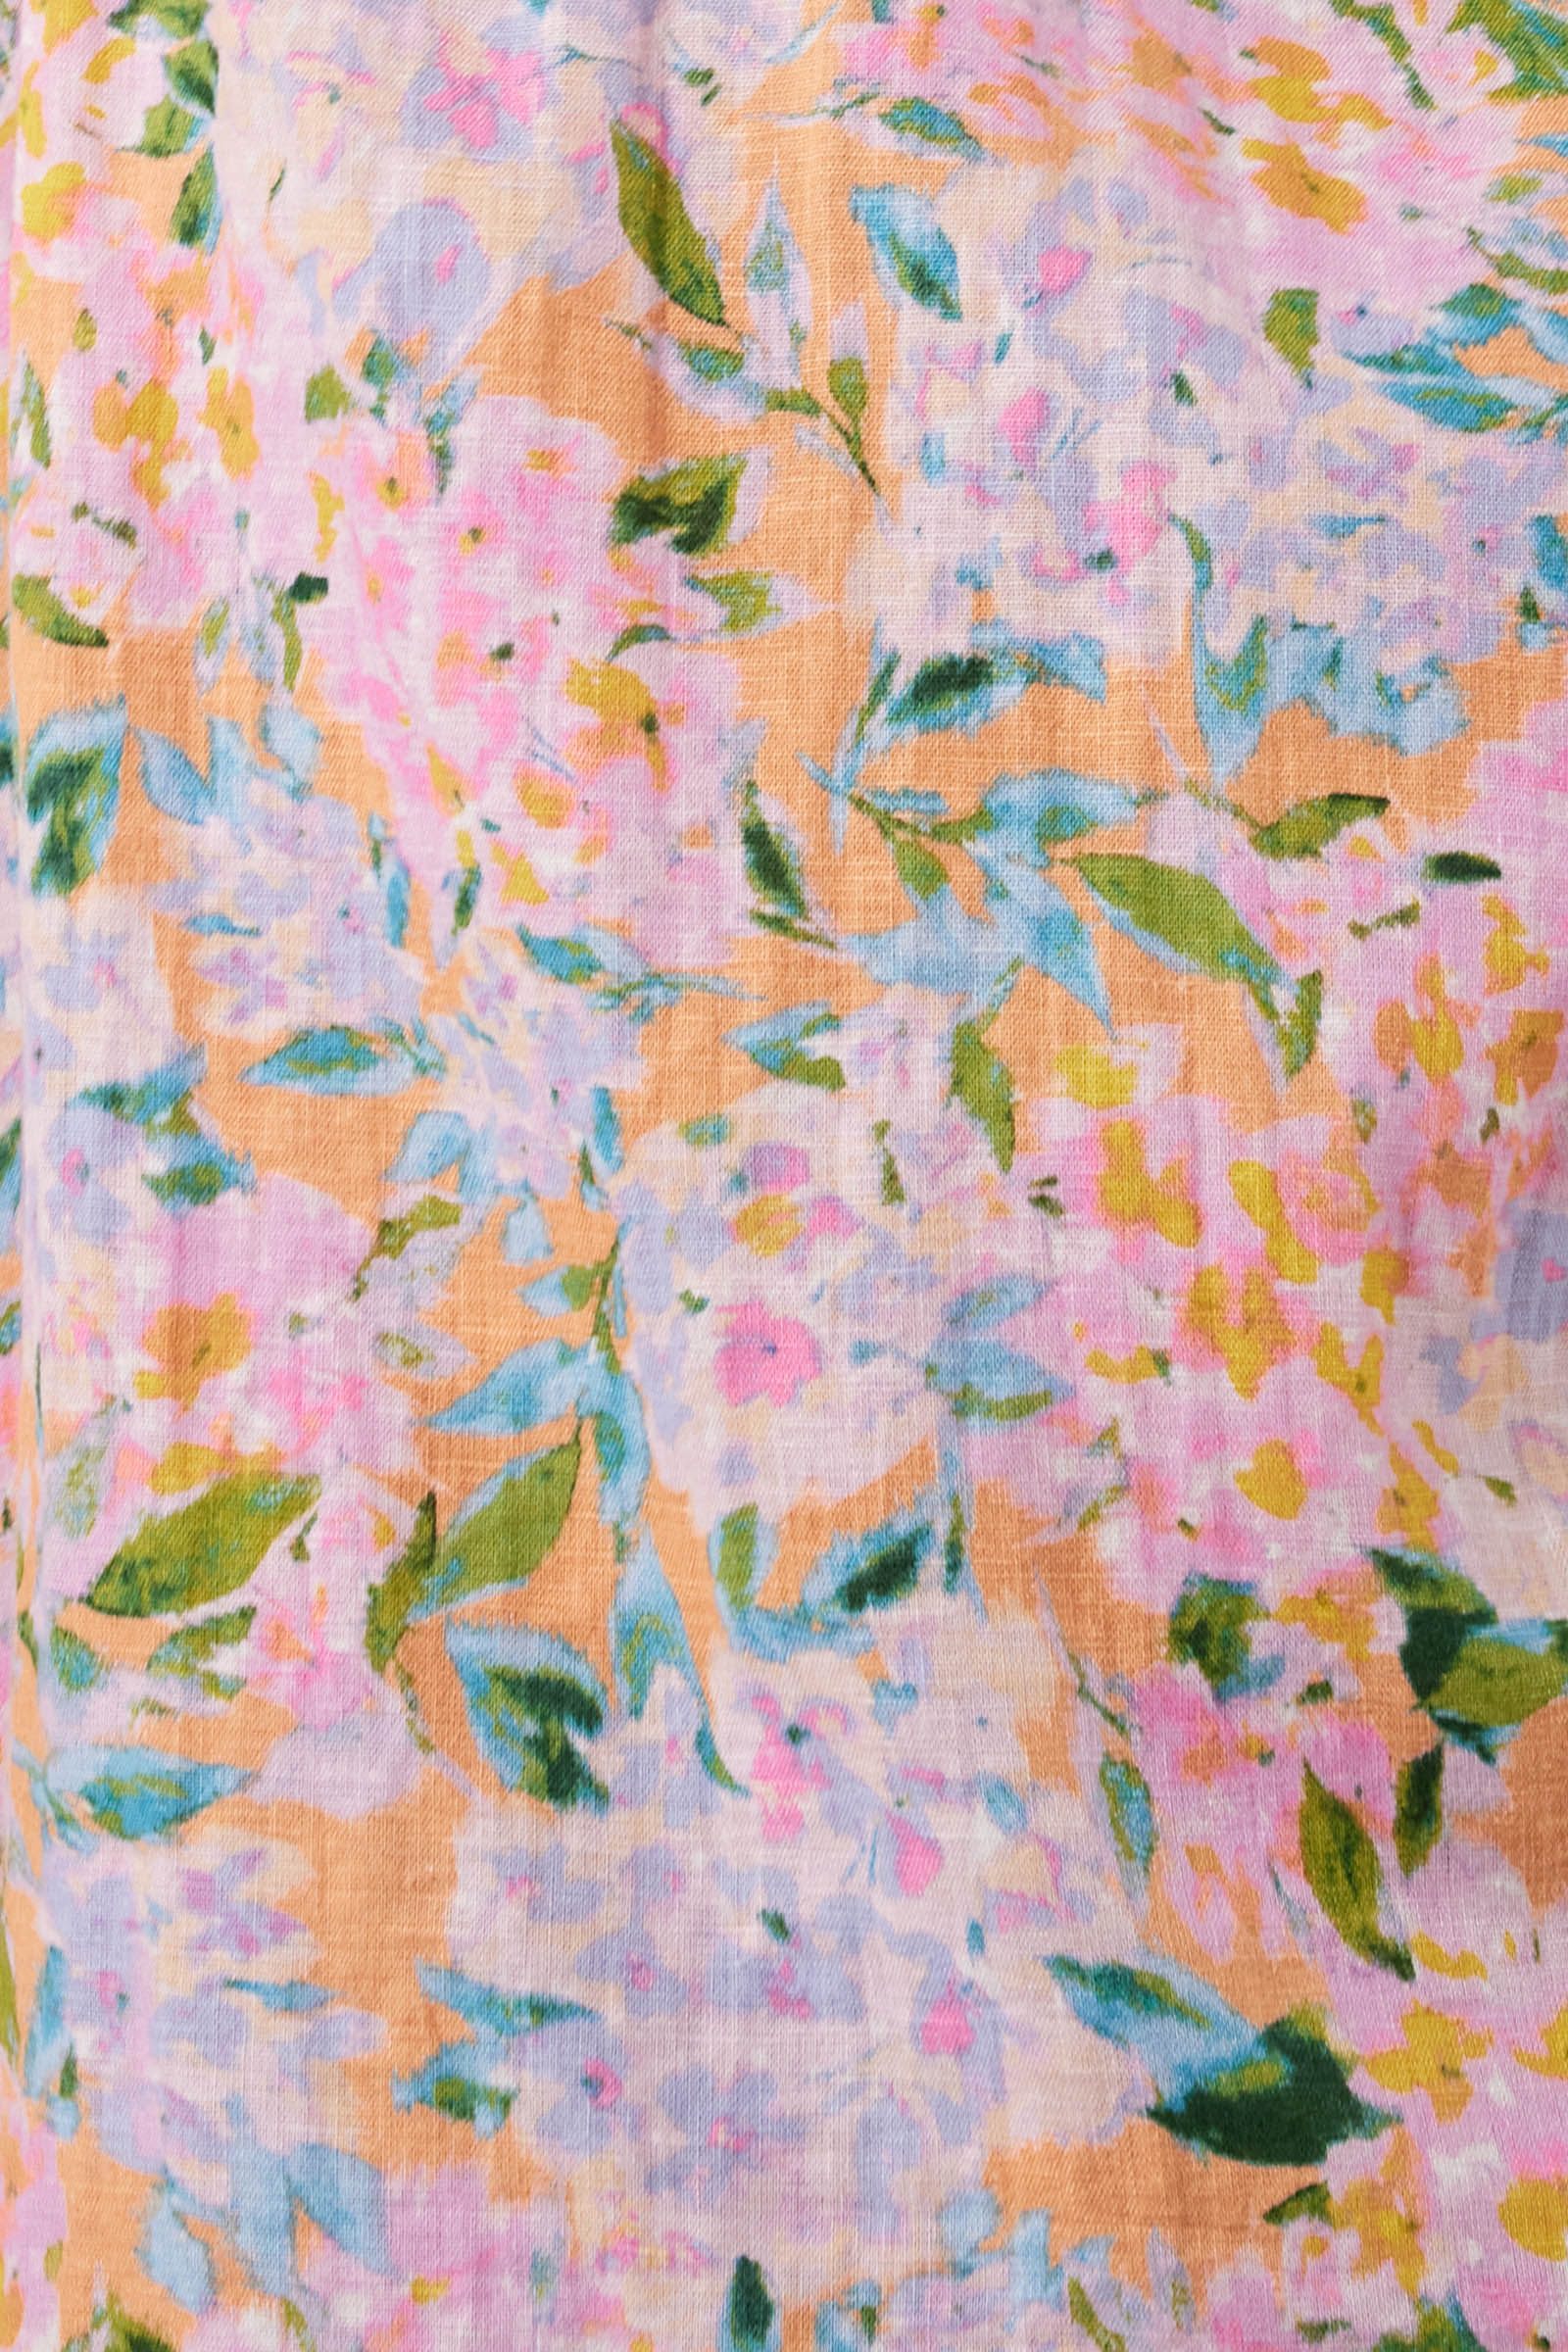 Flora Lace Dress - Sunset Hydrangea - Isle of Mine Clothing - Dress Mid Linen